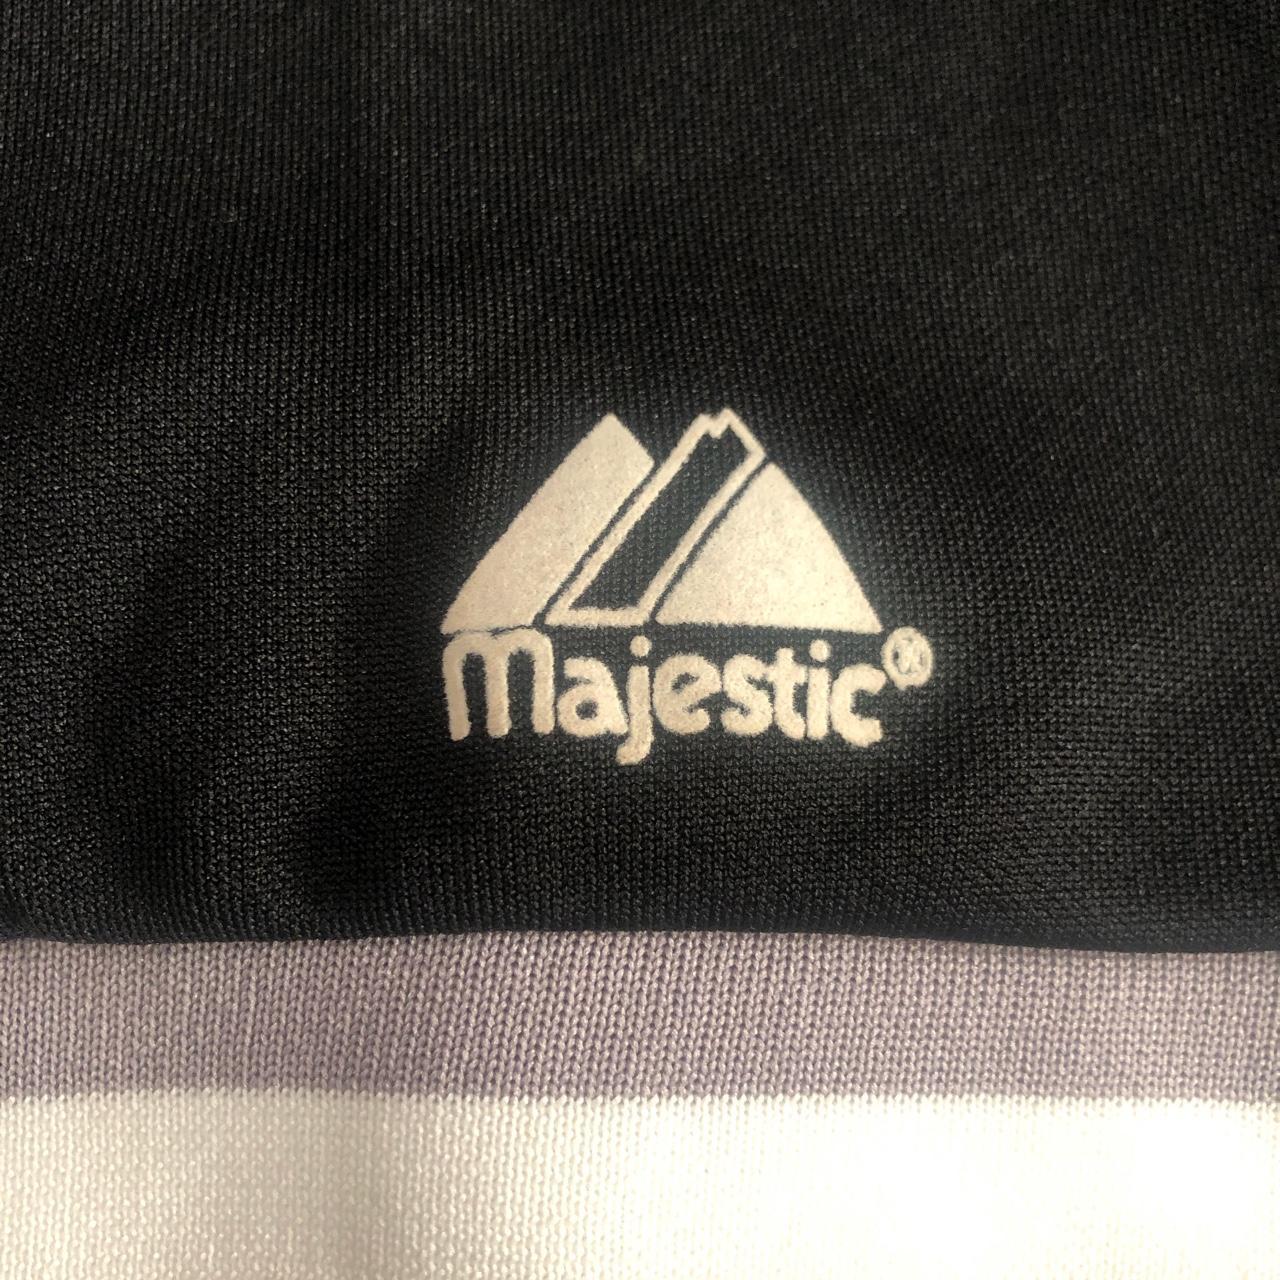 Majestic, Shirts, Joe Crede 24 Chicago White Sox Majestic Button Up Jersey  Size Medium Black